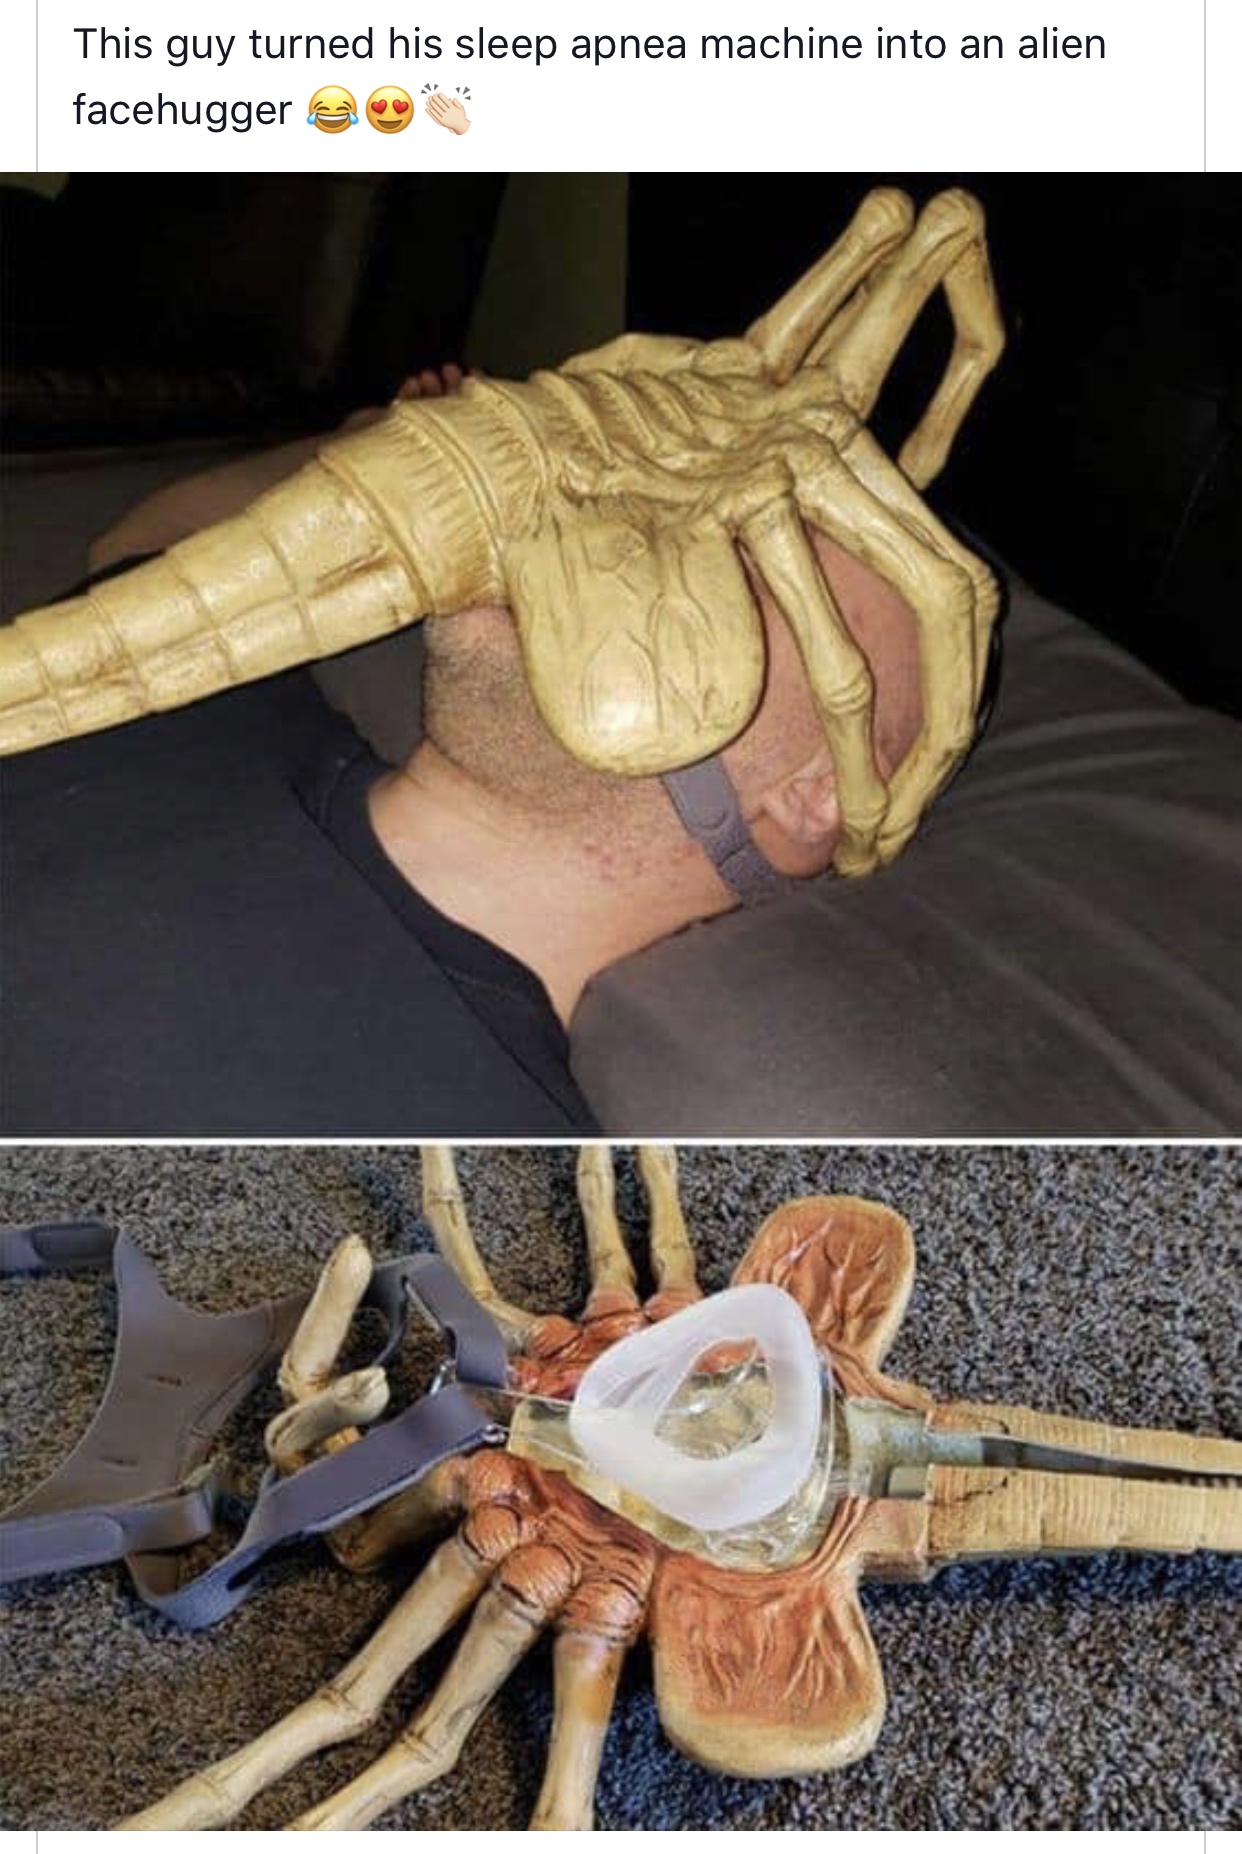 alien cpap mask - This guy turned his sleep apnea machine into an alien facehugger